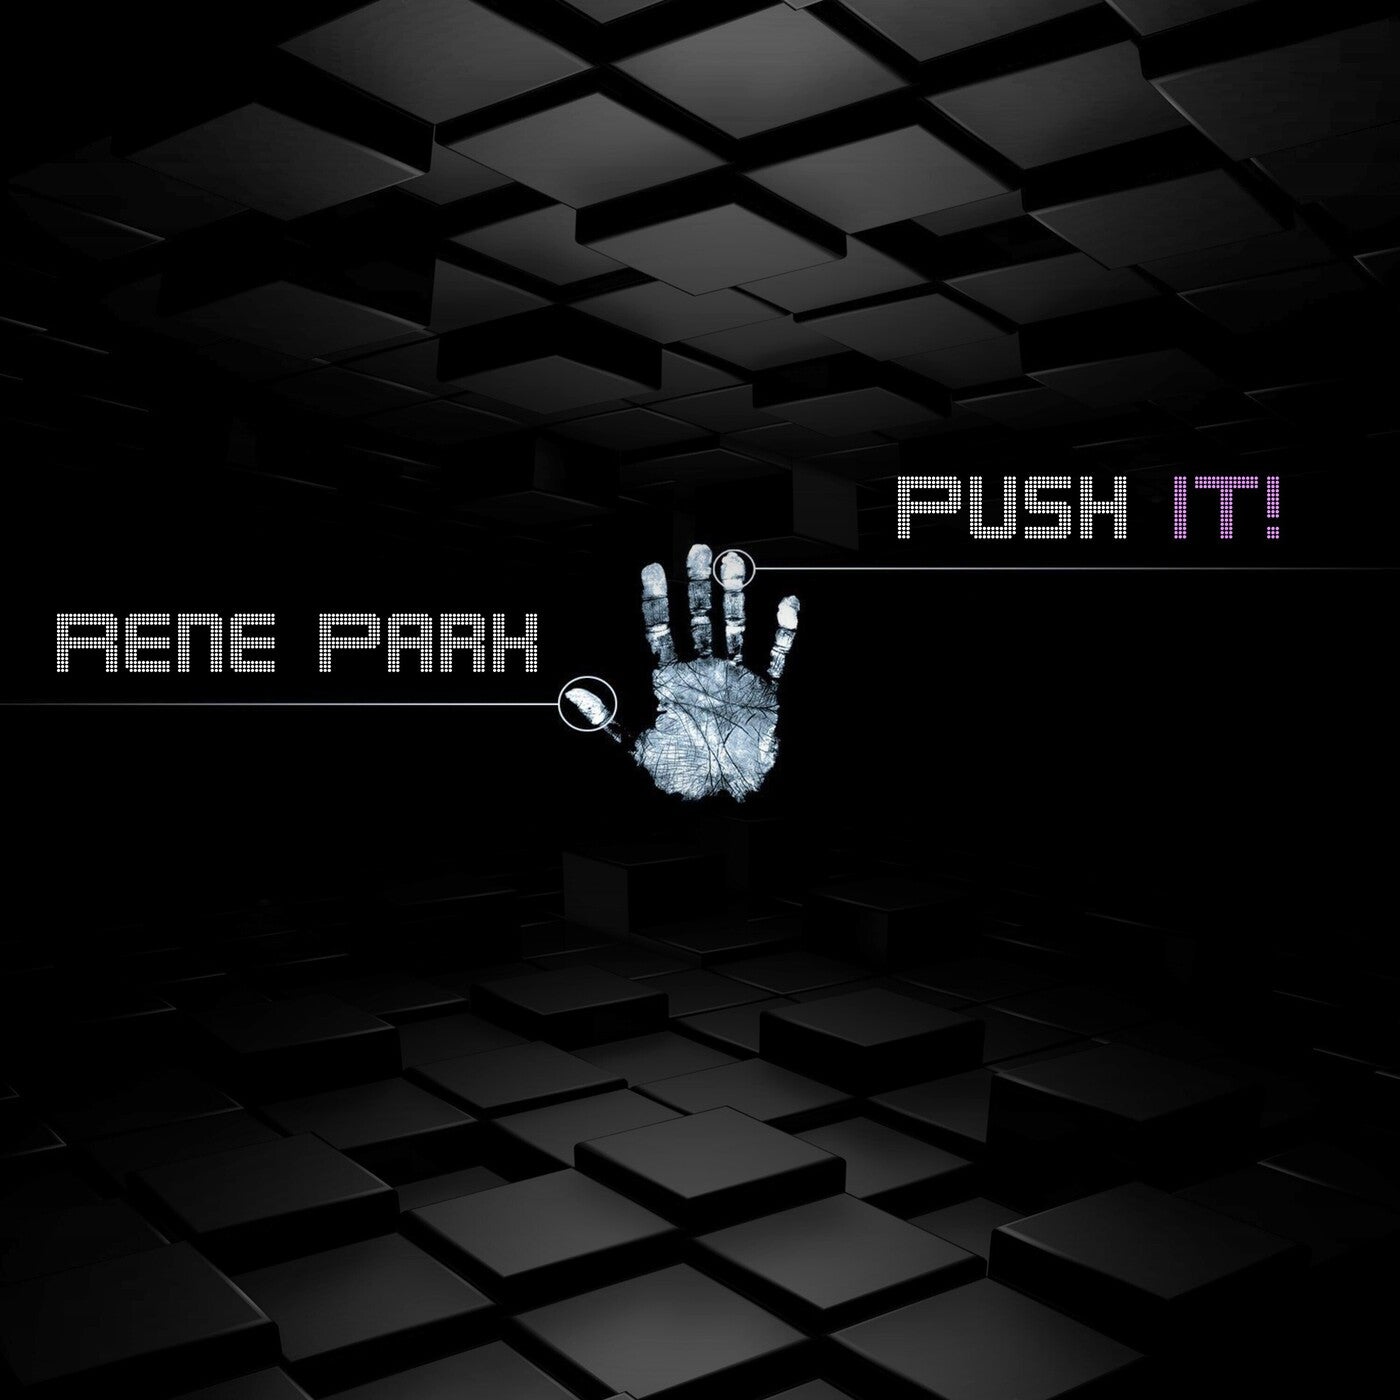 Push it